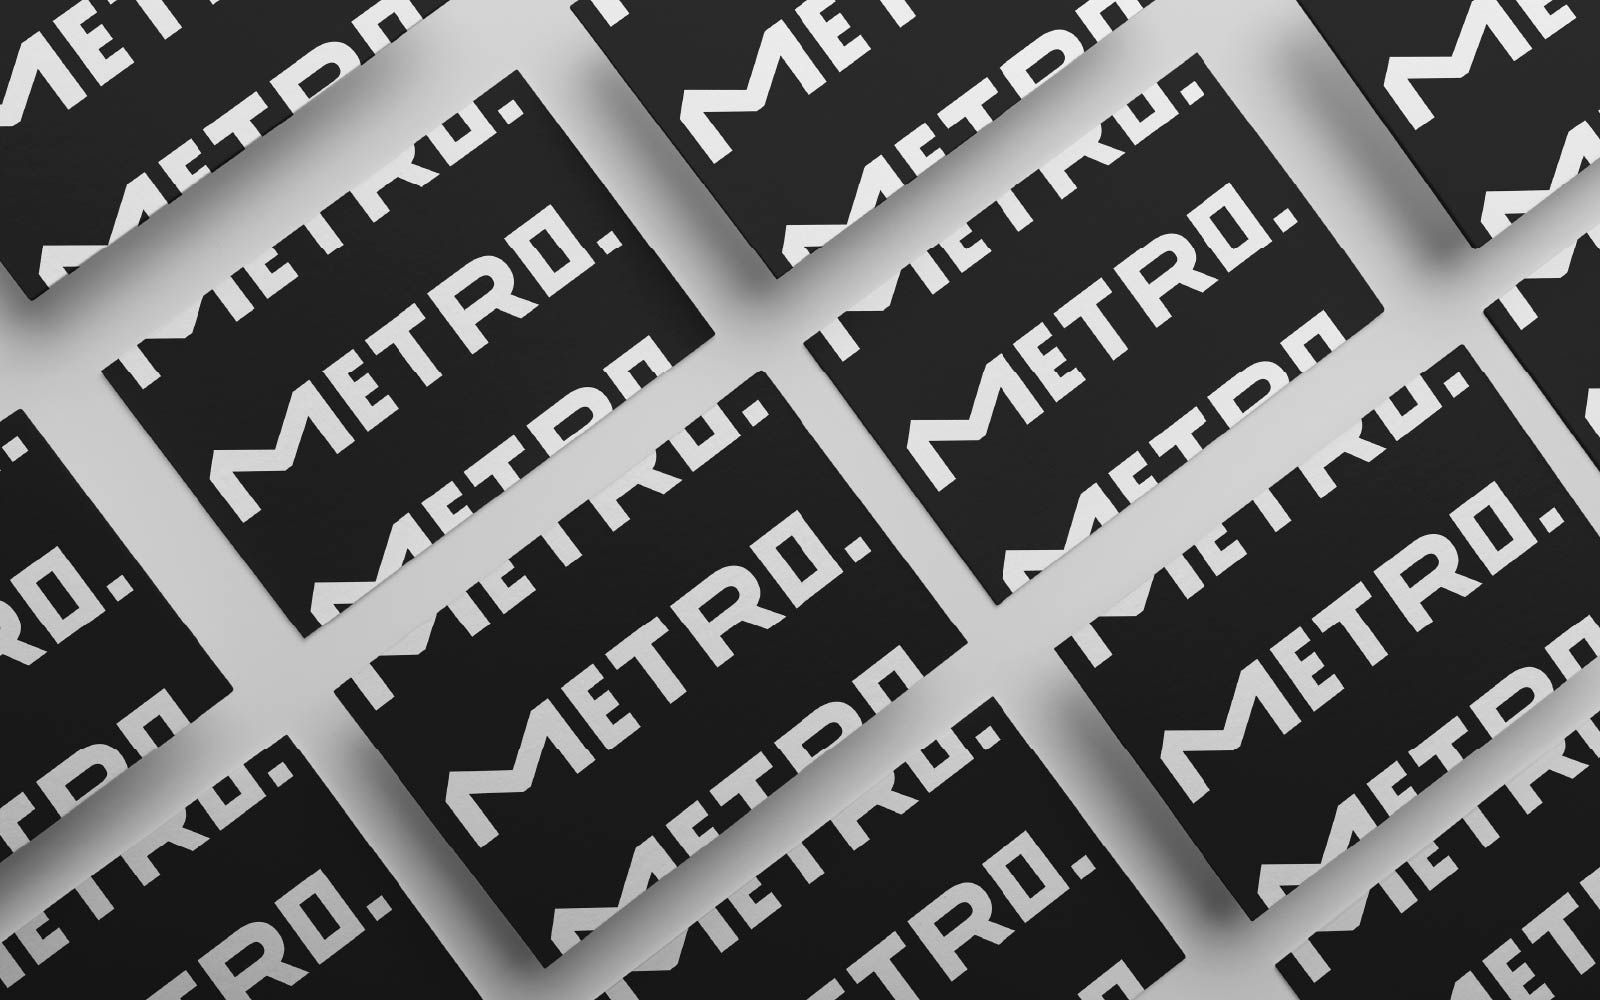 Metropolitano.gal - Diseño Branding - Vigo